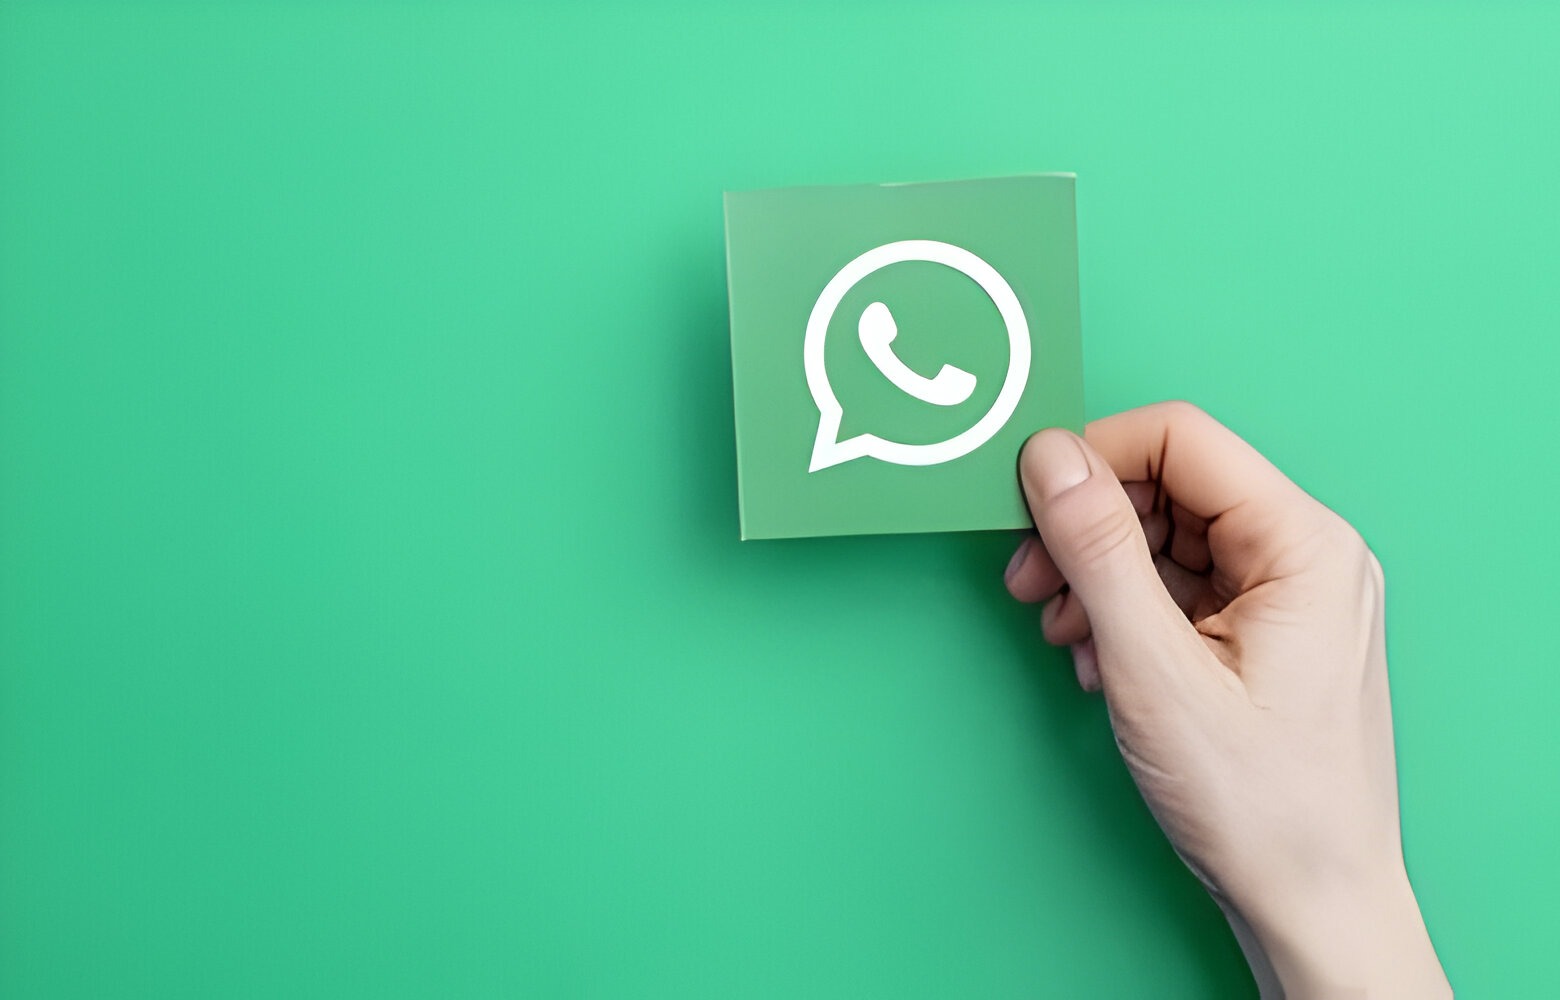 WhatsApp Marketing Agency in Dubai